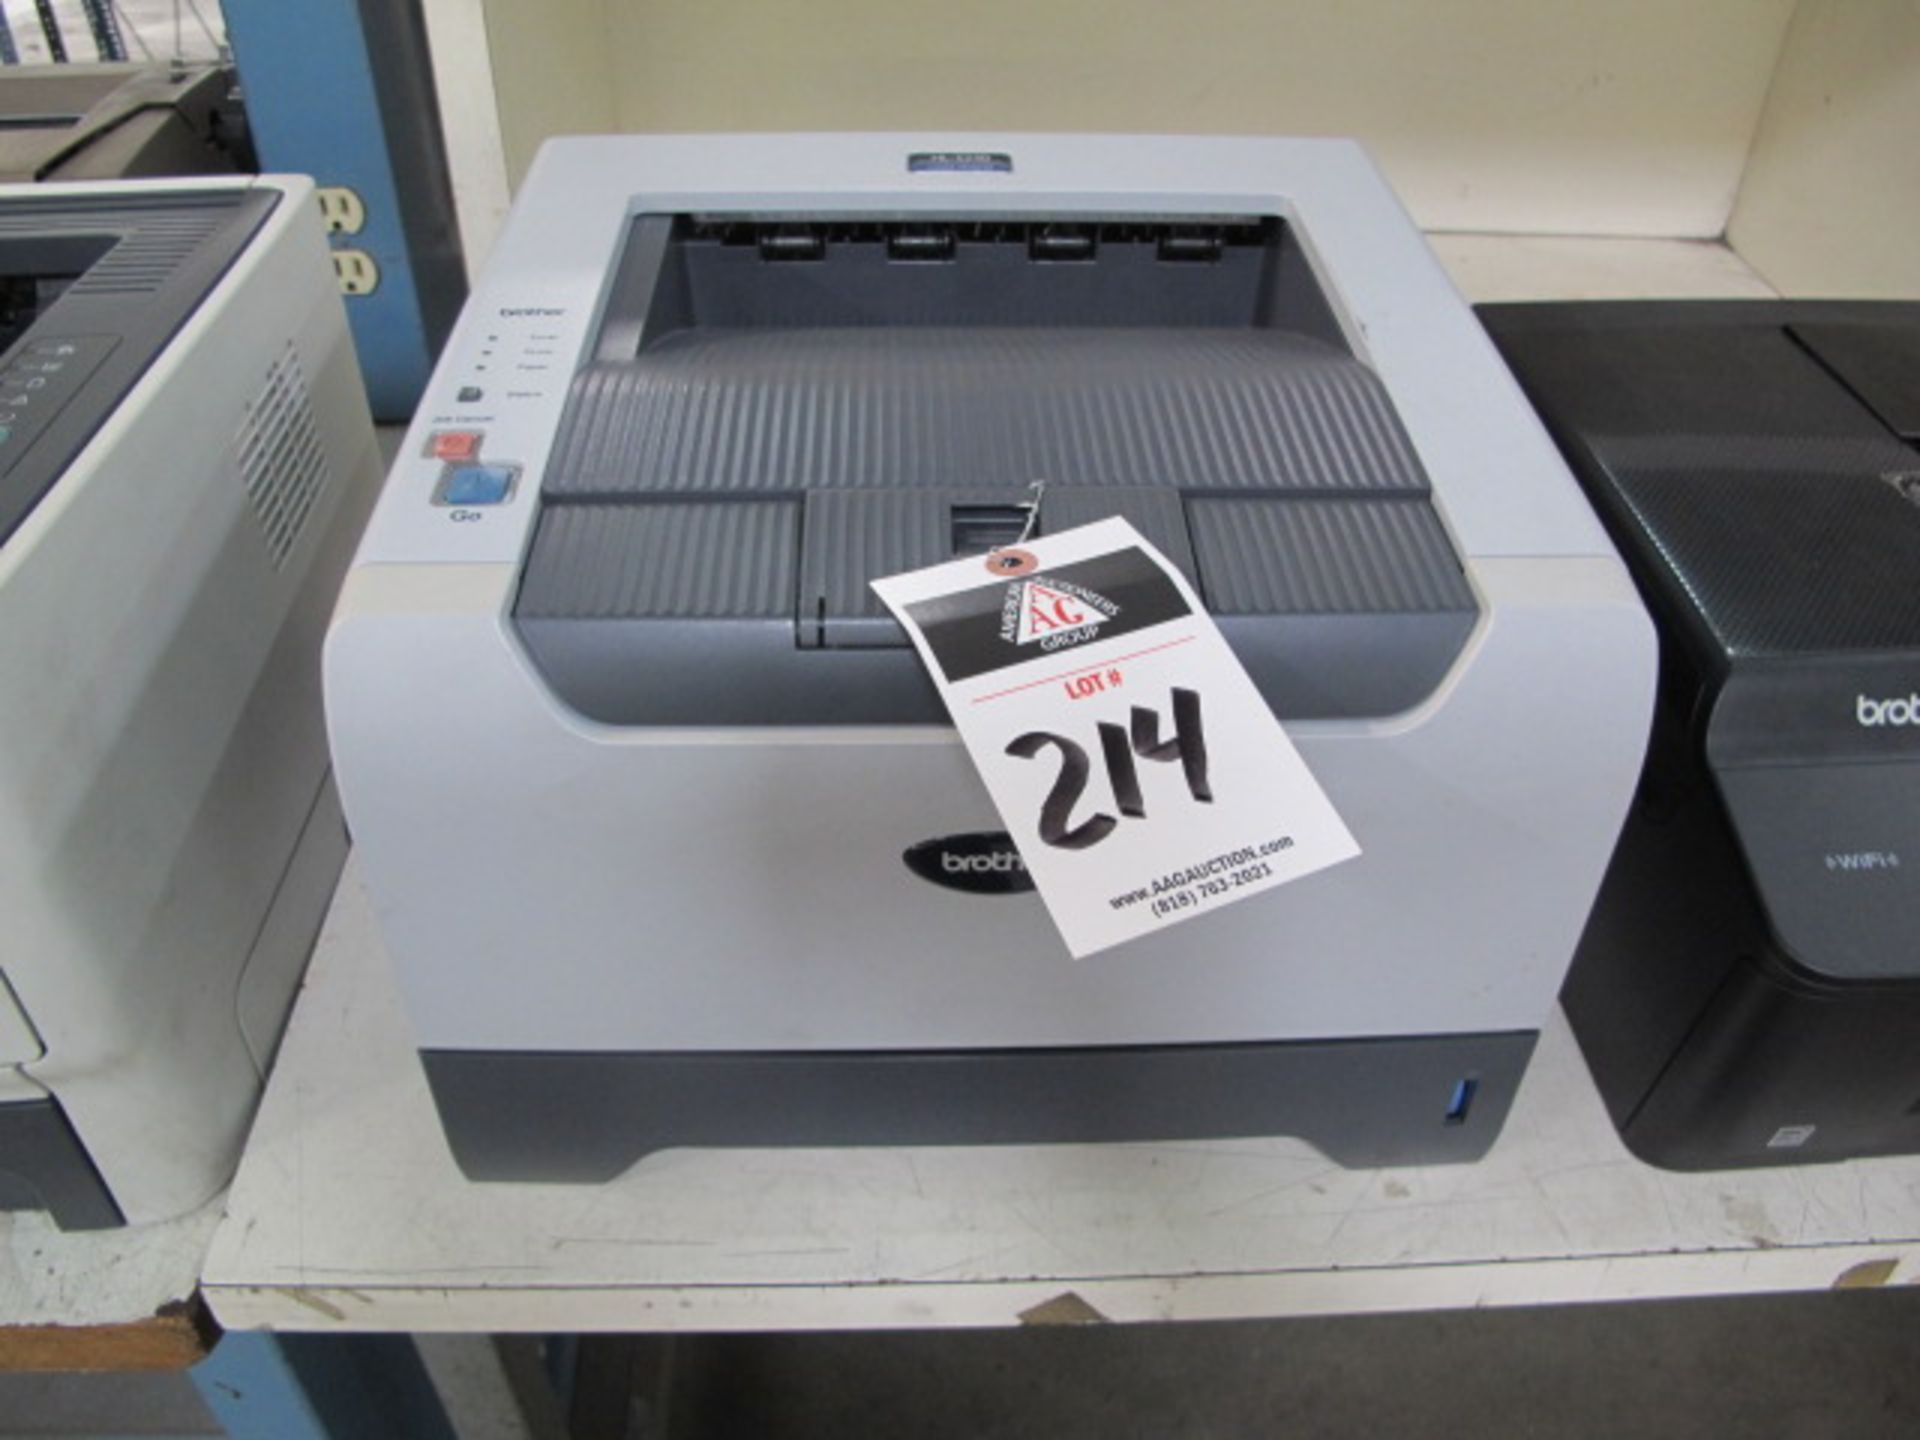 Brother HL-5240 Printer